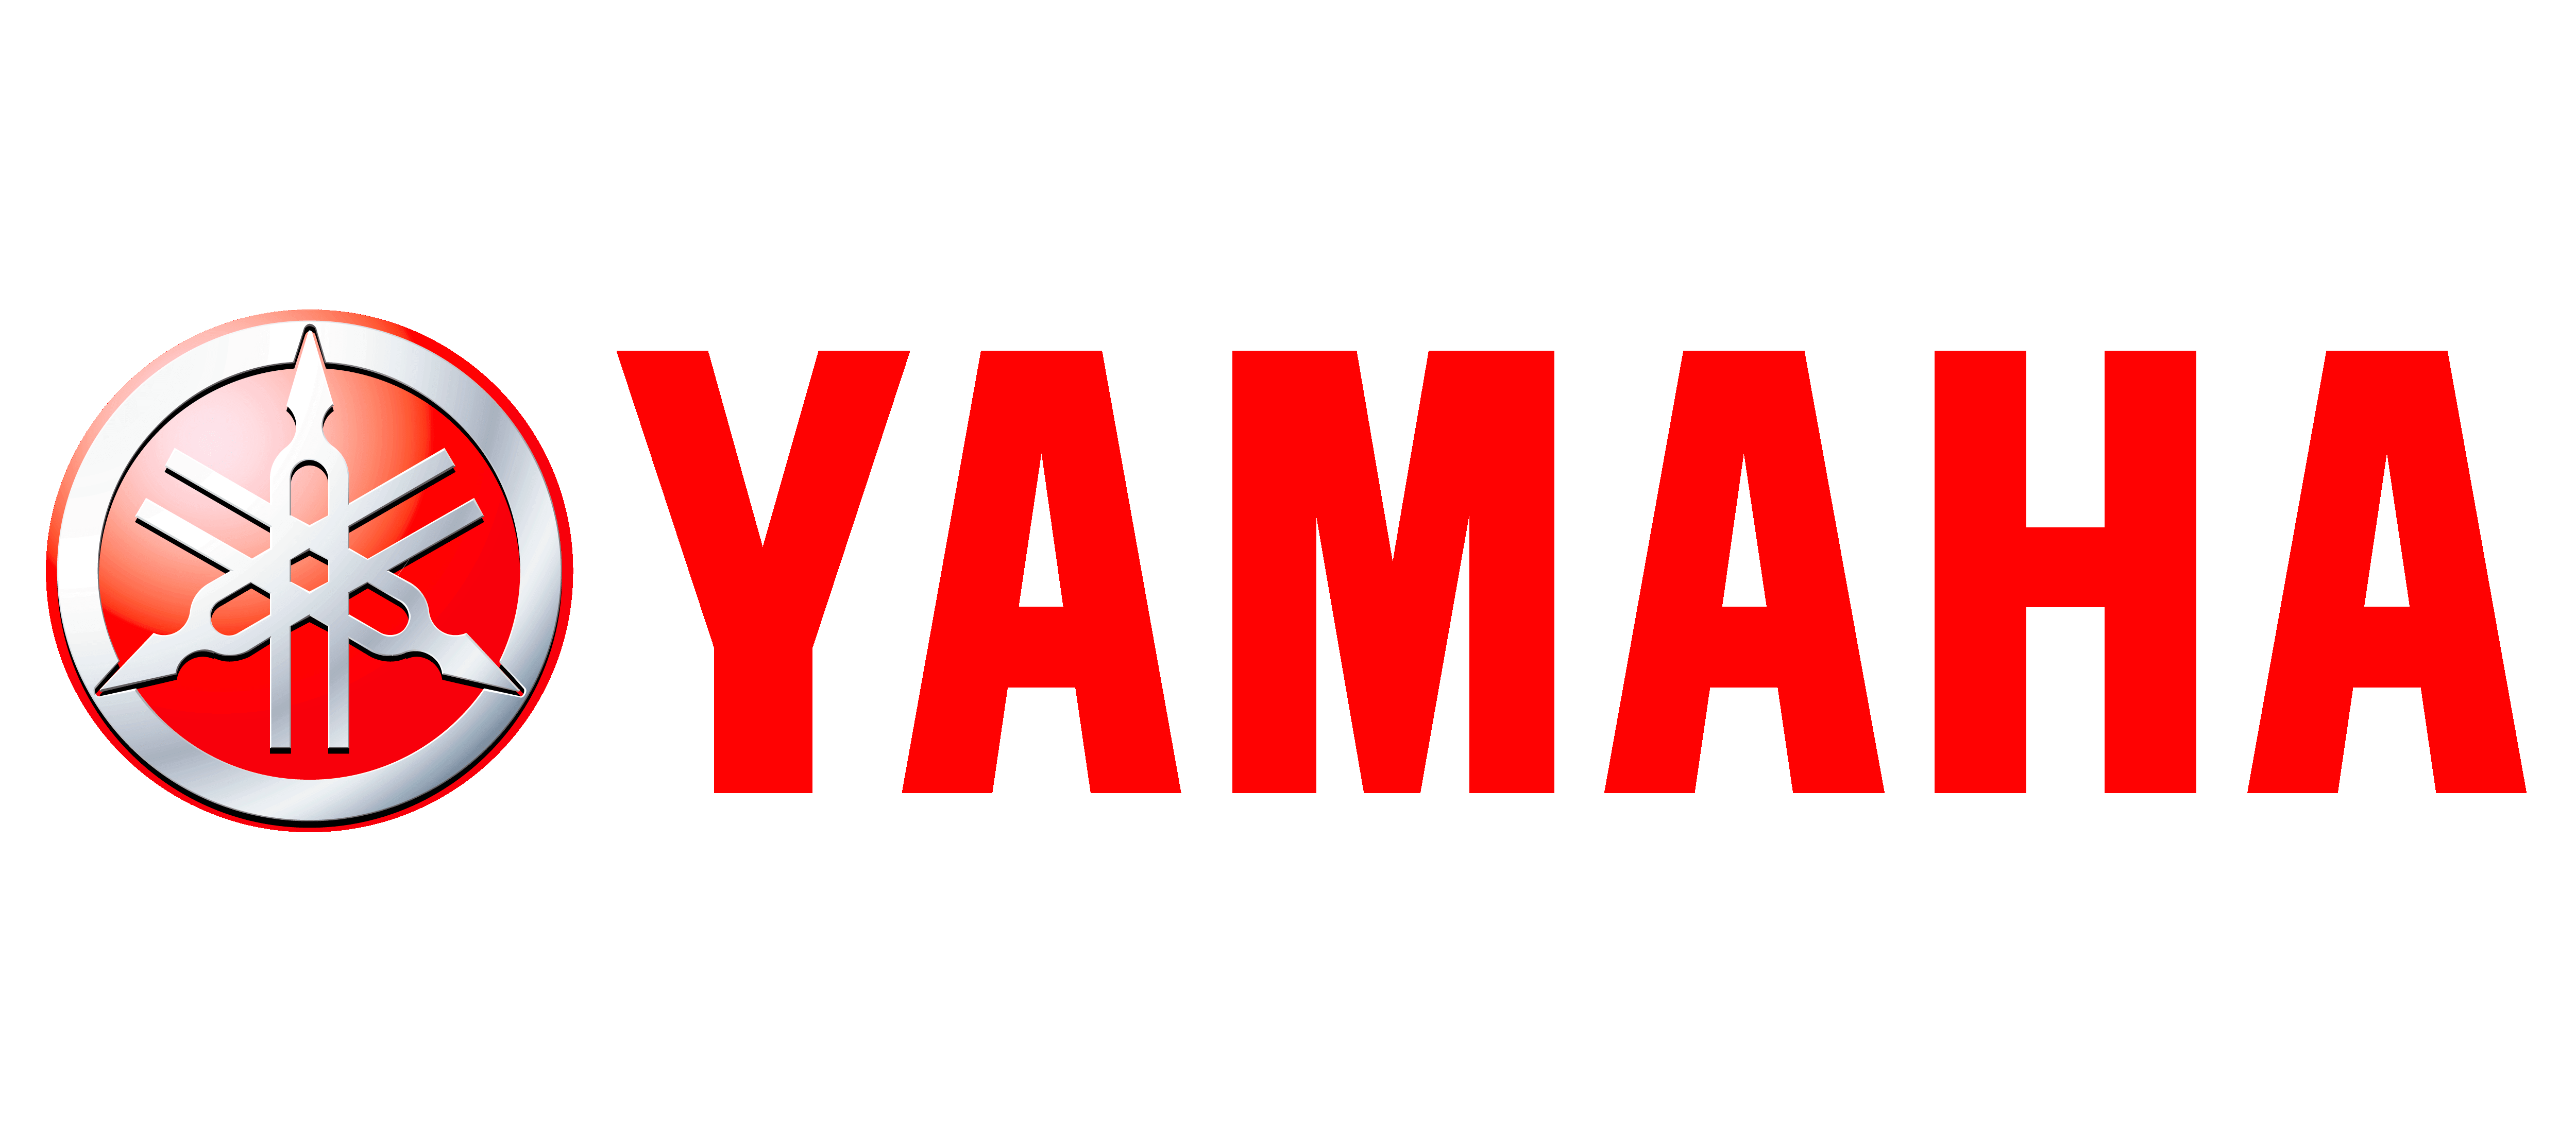 See how Yamaha lets you take 